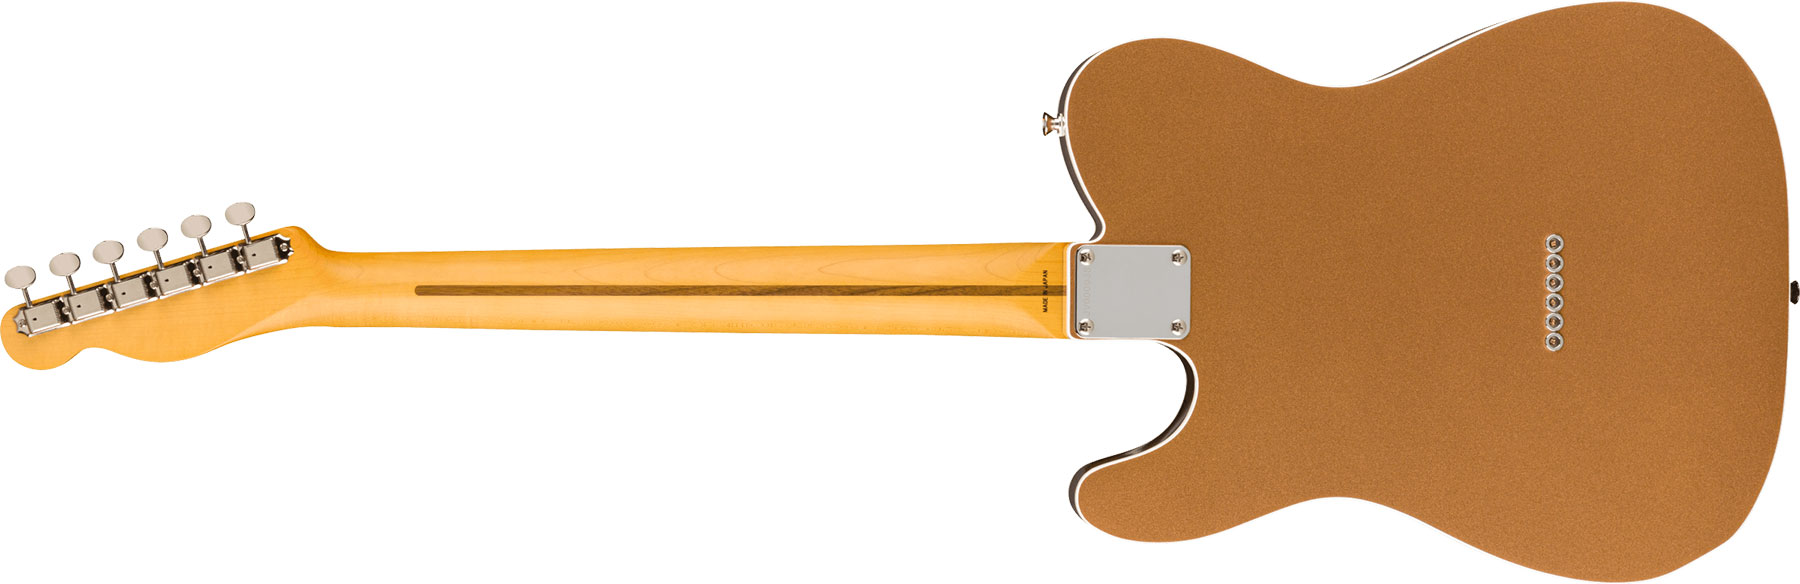 Fender Tele Custom '60s Jv Modified Jap 2s Ht Rw - Firemist Gold - Tel shape electric guitar - Variation 1